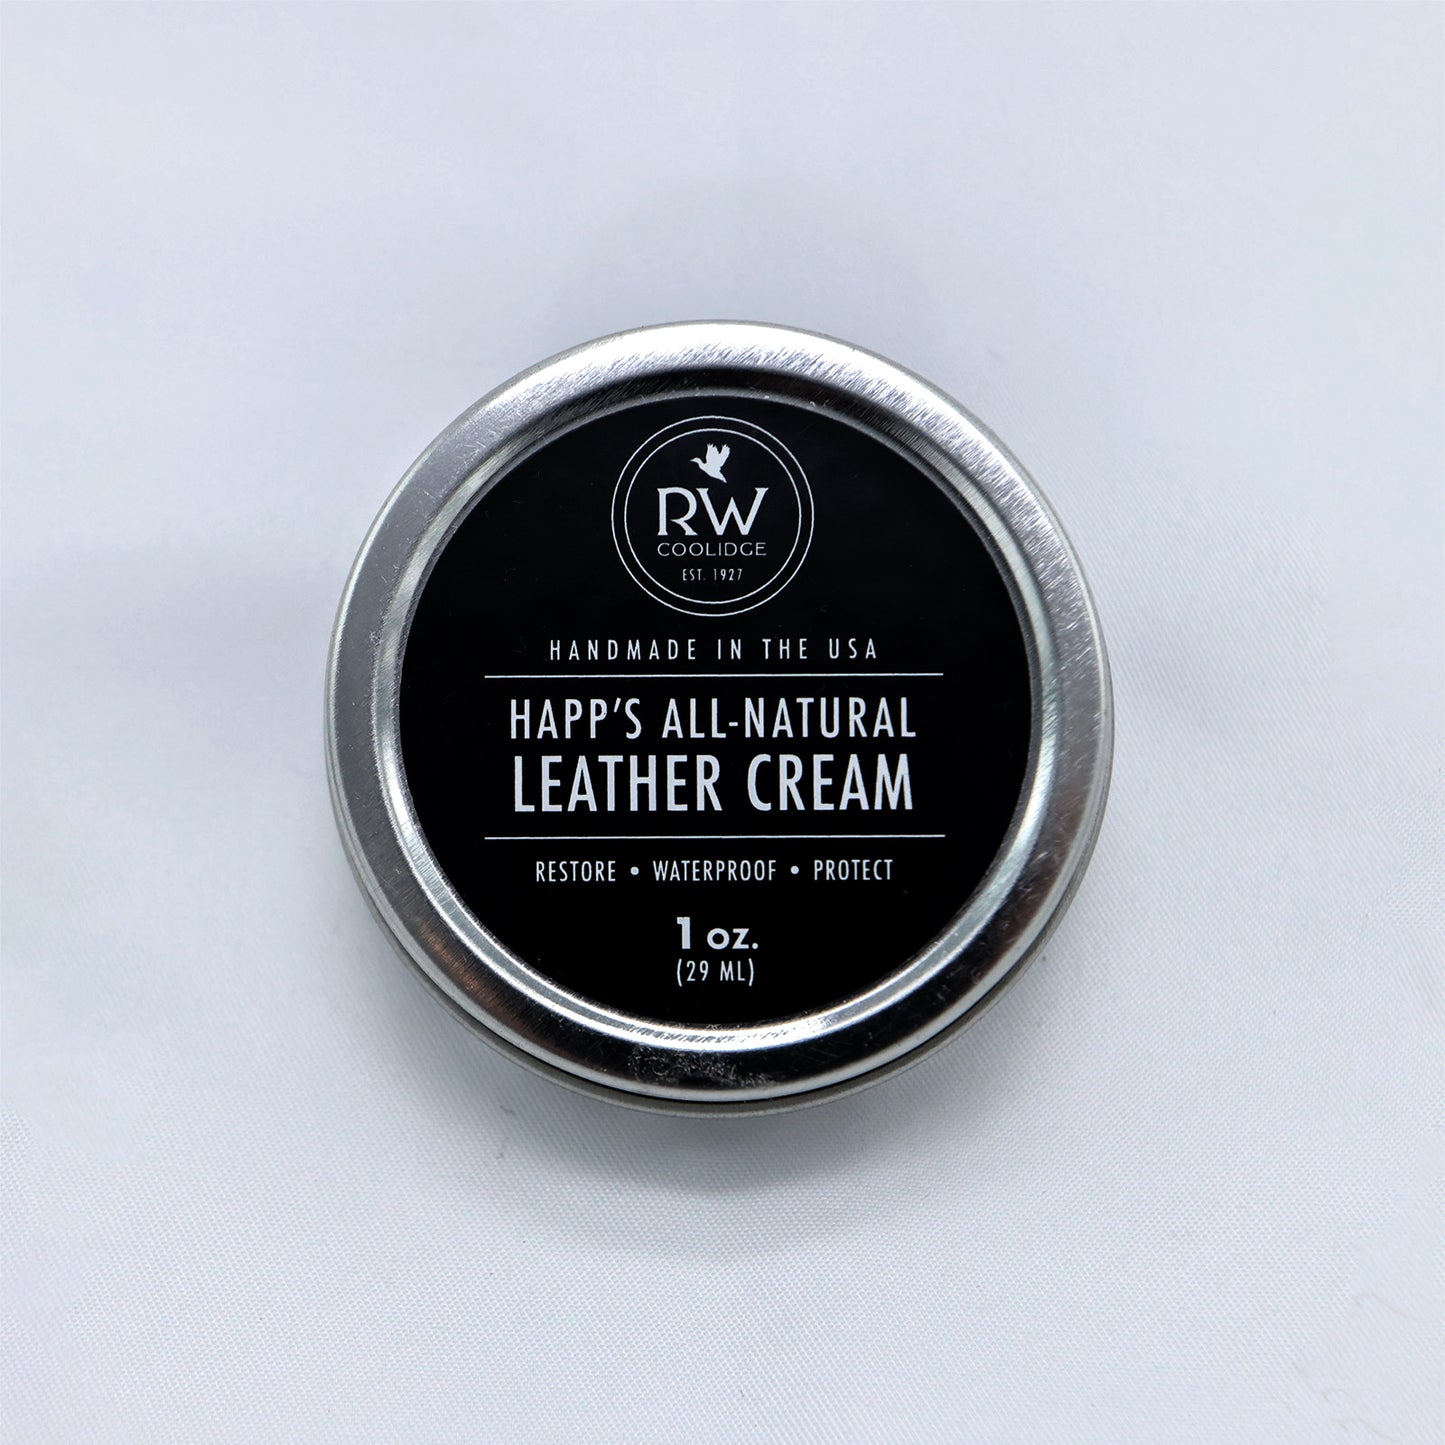 Happ's All-Natural Leather Cream